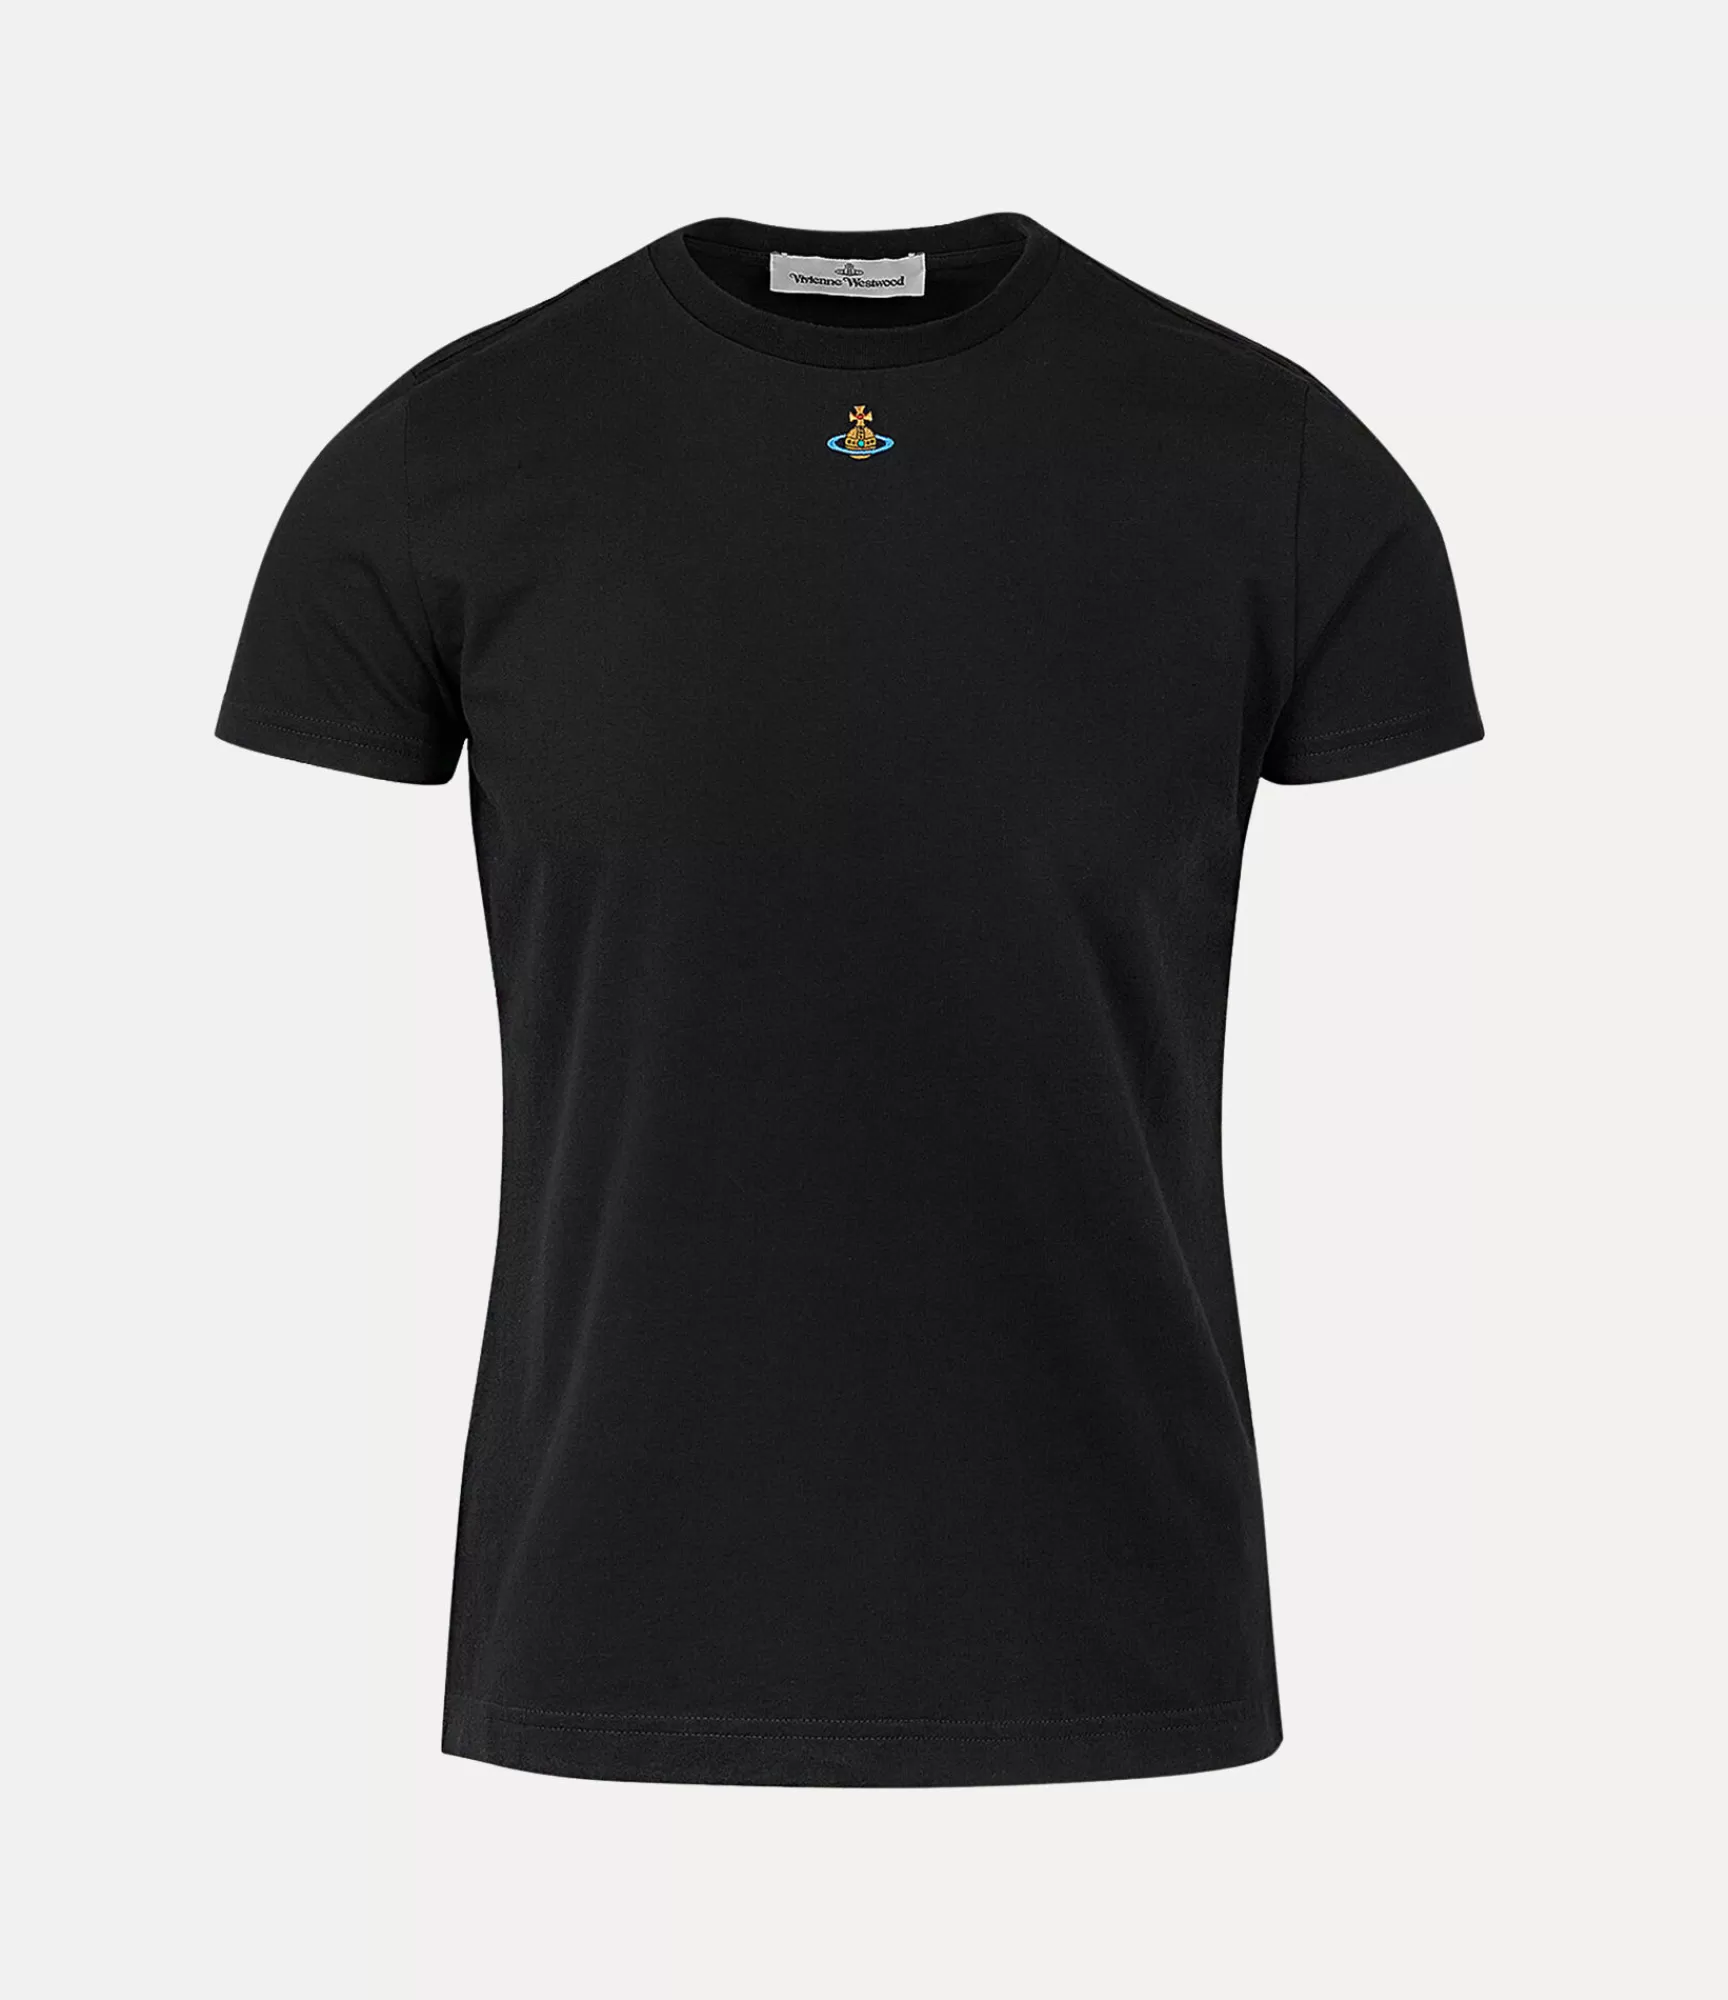 Vivienne Westwood Sweatshirts and T-Shirts*Orb peru' t-shirt Black